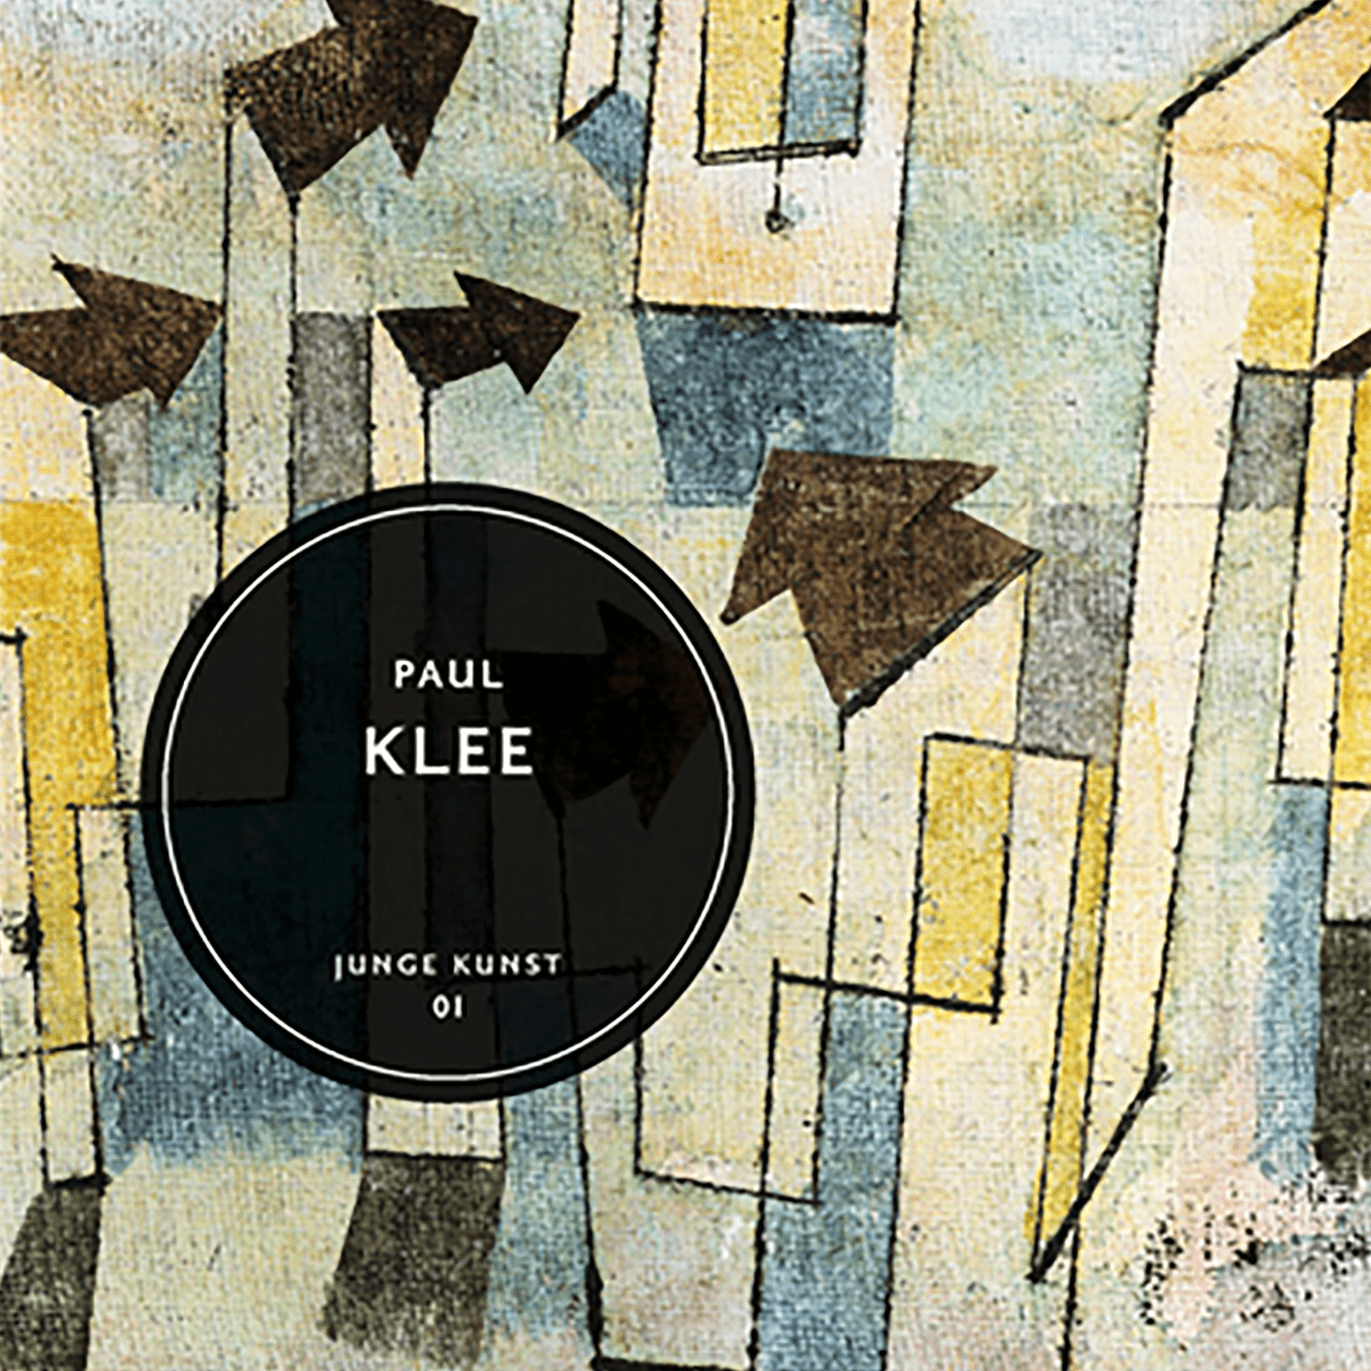 Paul Klee - Young Art 1的图片
